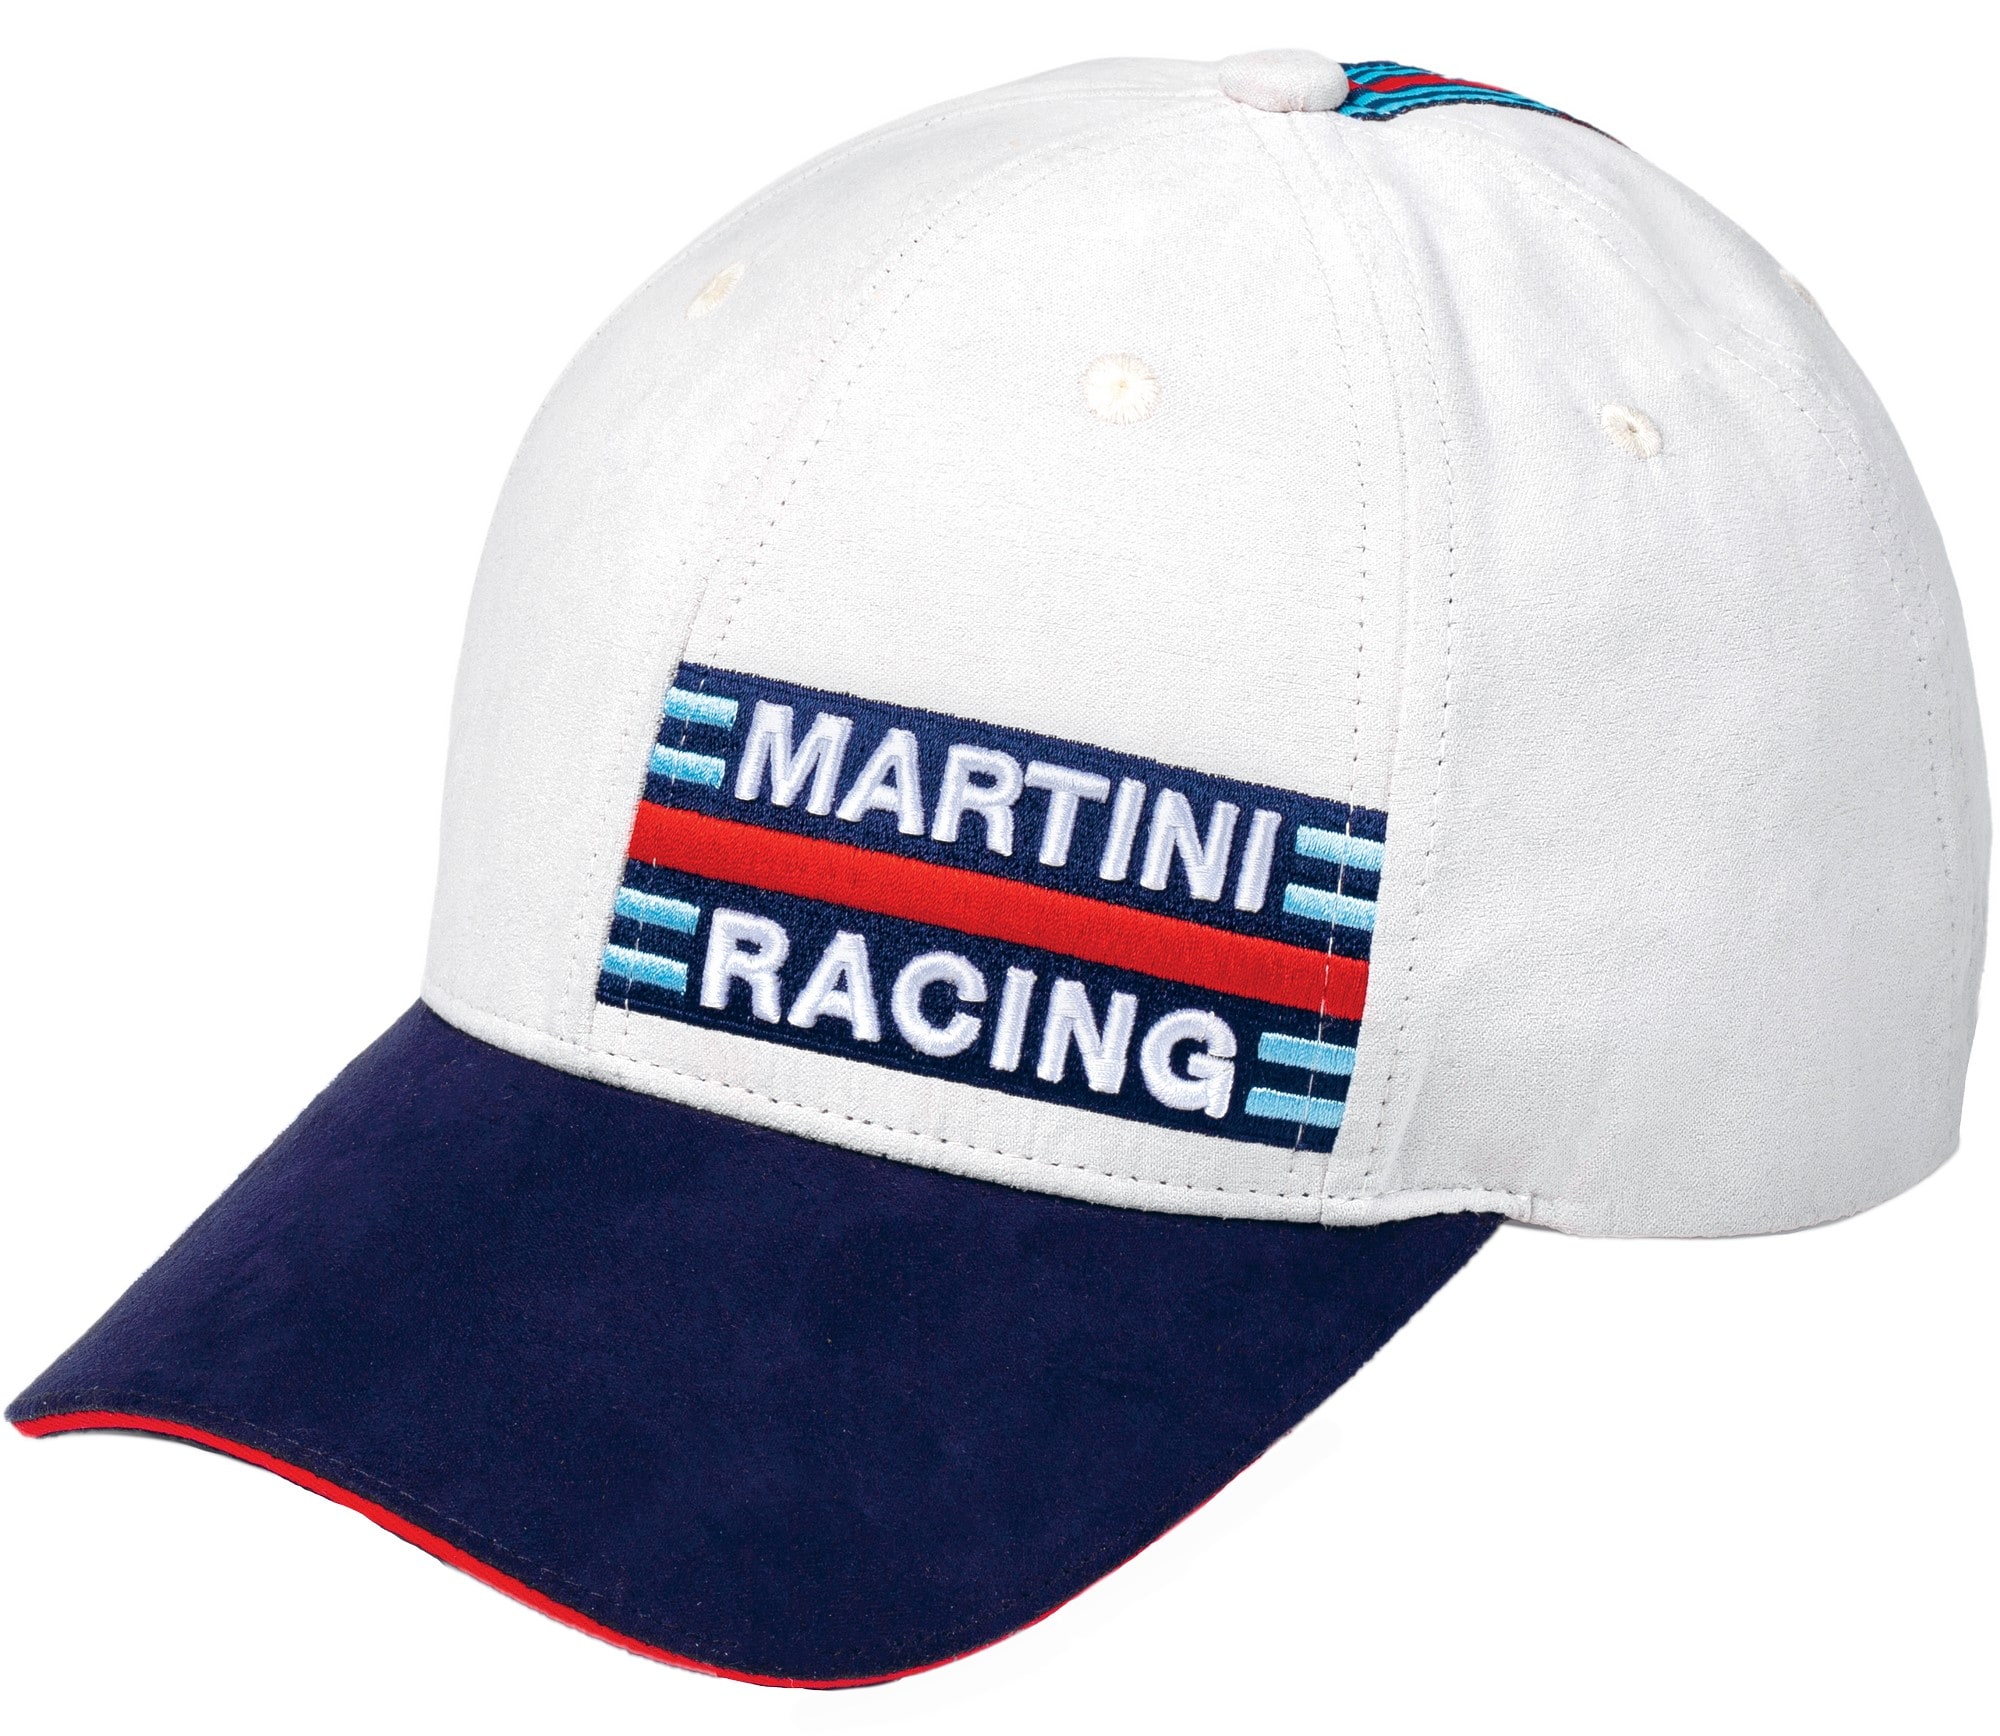 Lippis Martini Racing